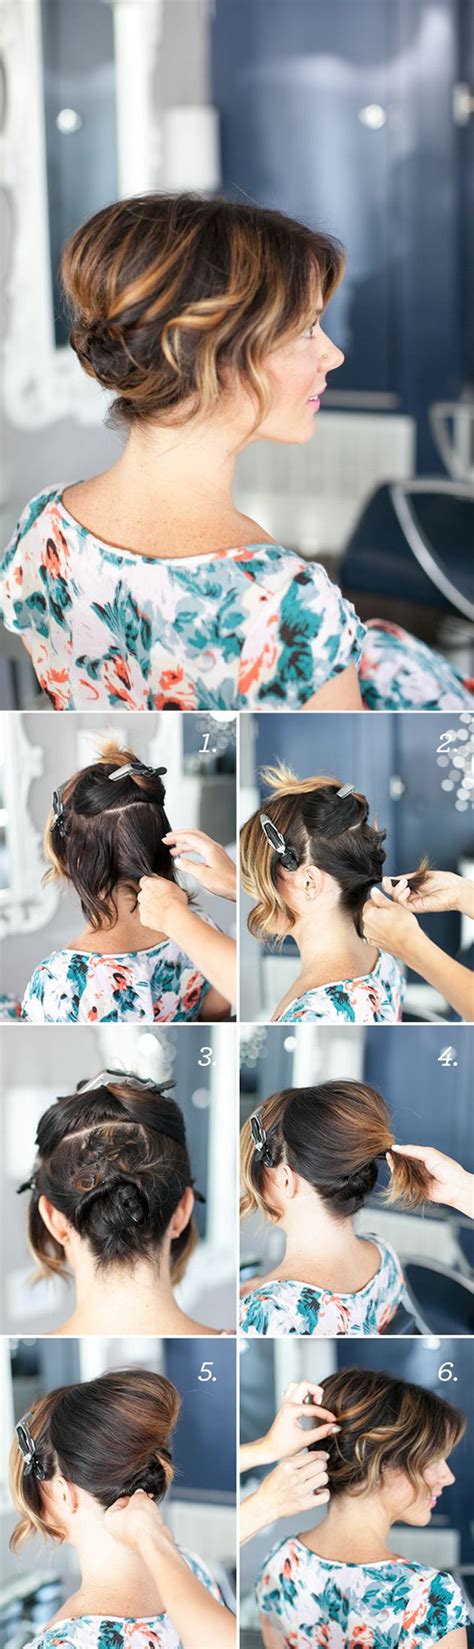 20 Creative Short Wedding Hairstyles For Brides